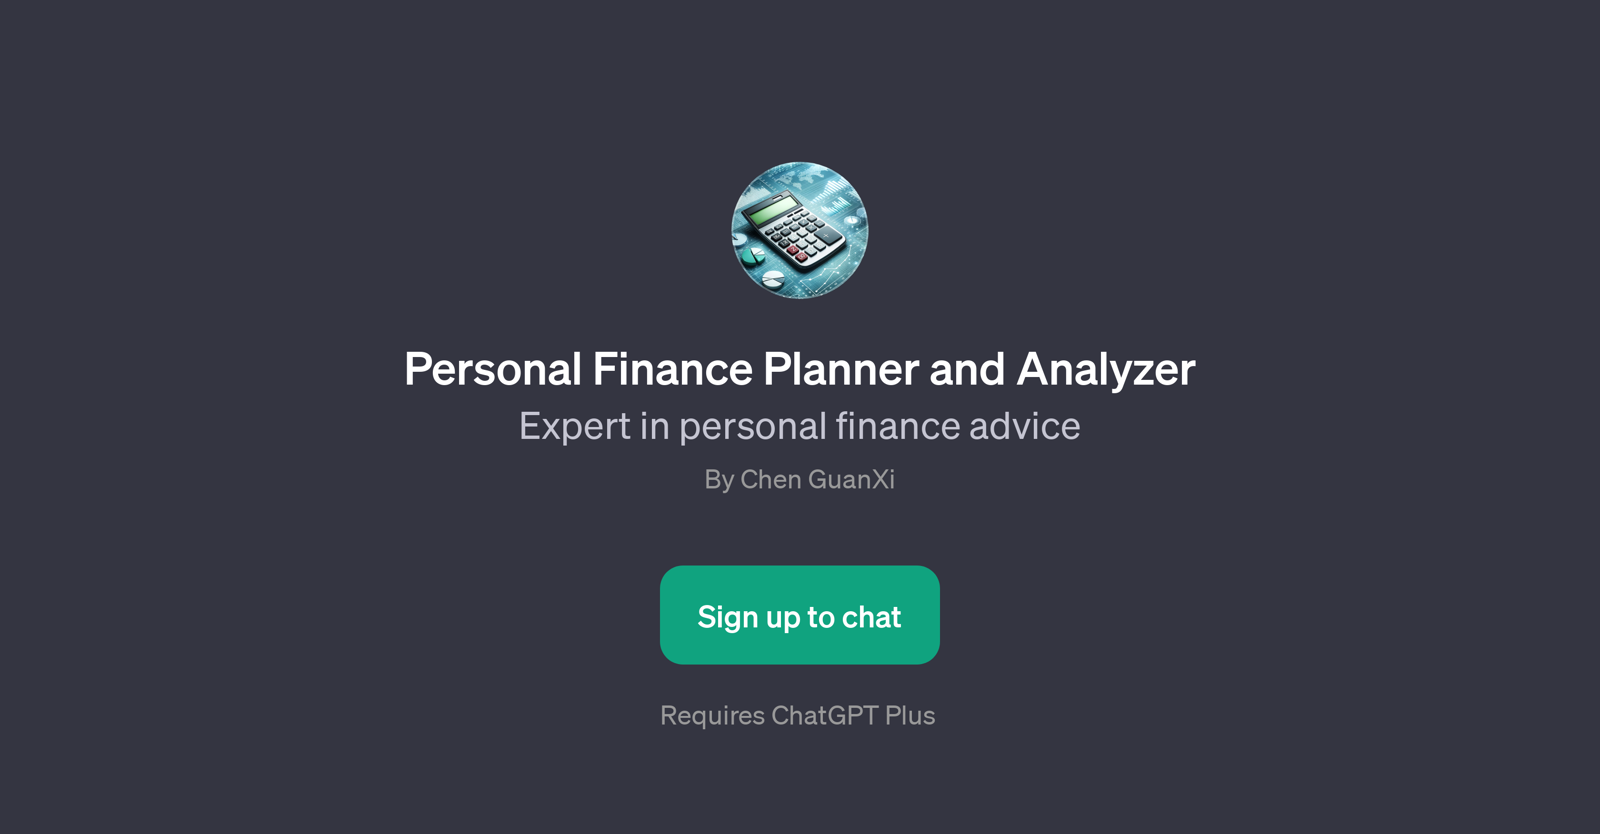 Personal Finance Planner and Analyzer website